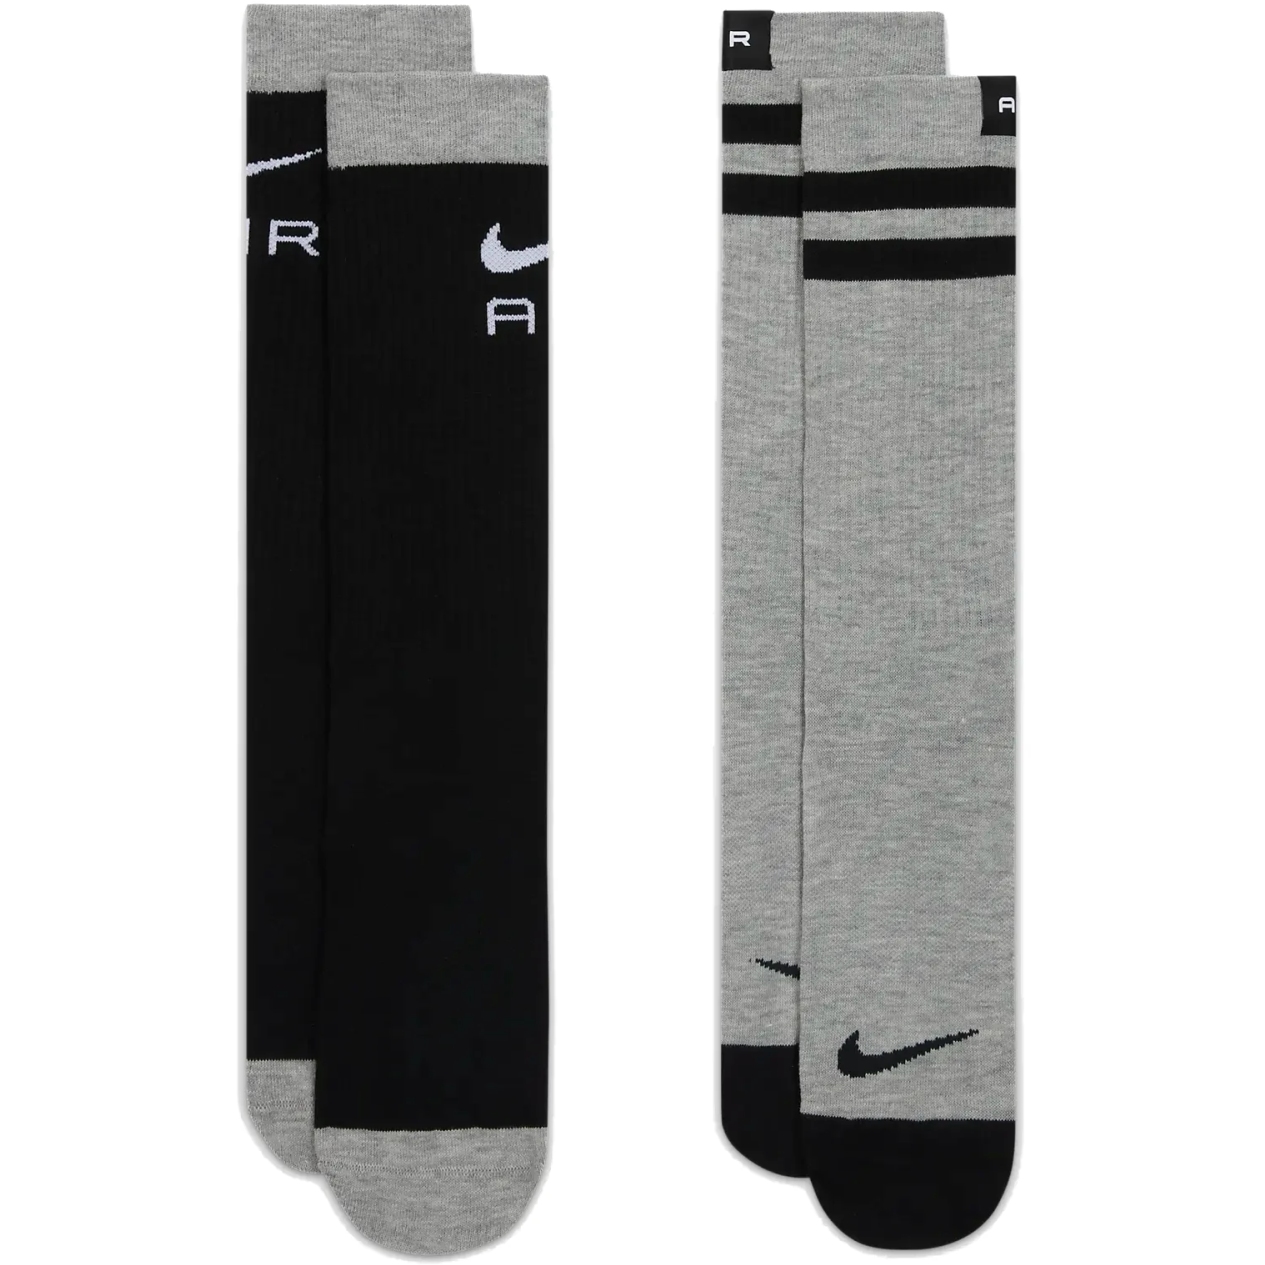 Produktbild von Nike Everyday Essential Crew Socken - 2 Paar - multi-color FN3149-900